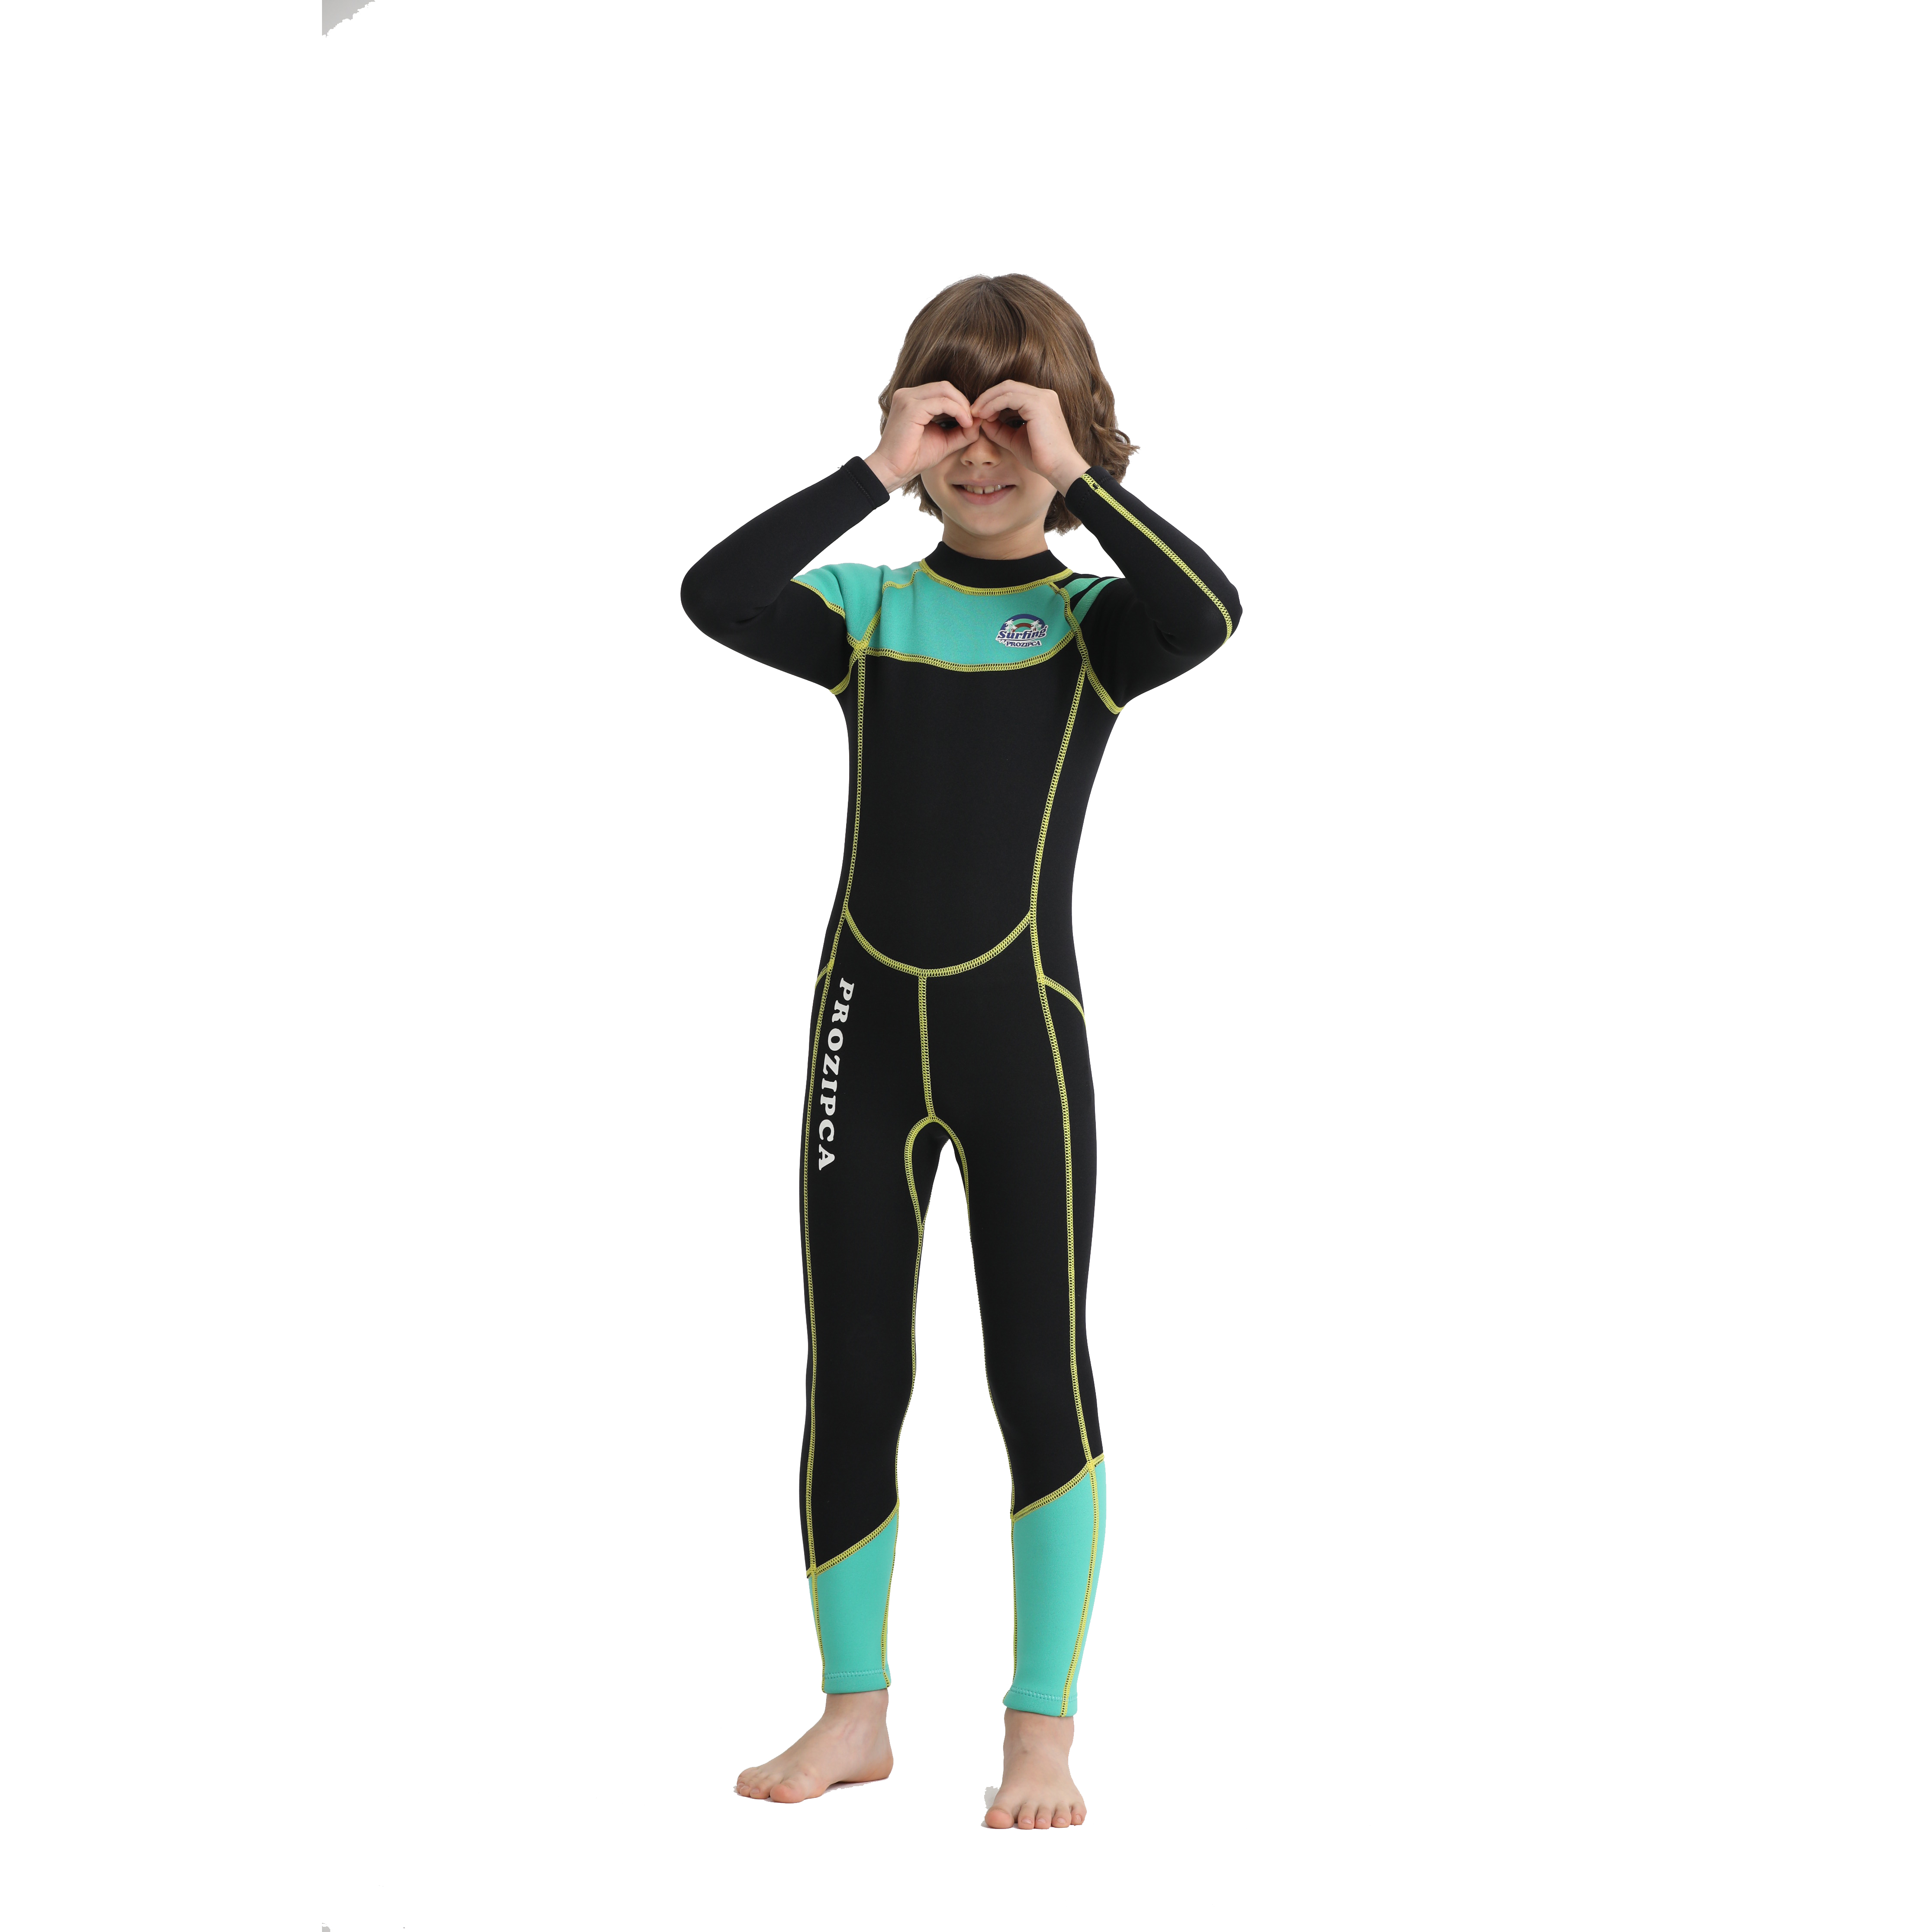 Customized Long Sleeve Trousers Back Zip Swimming Suit Boys Children 3Mm Freediving Surfing Kids Wetsuit Neoprene